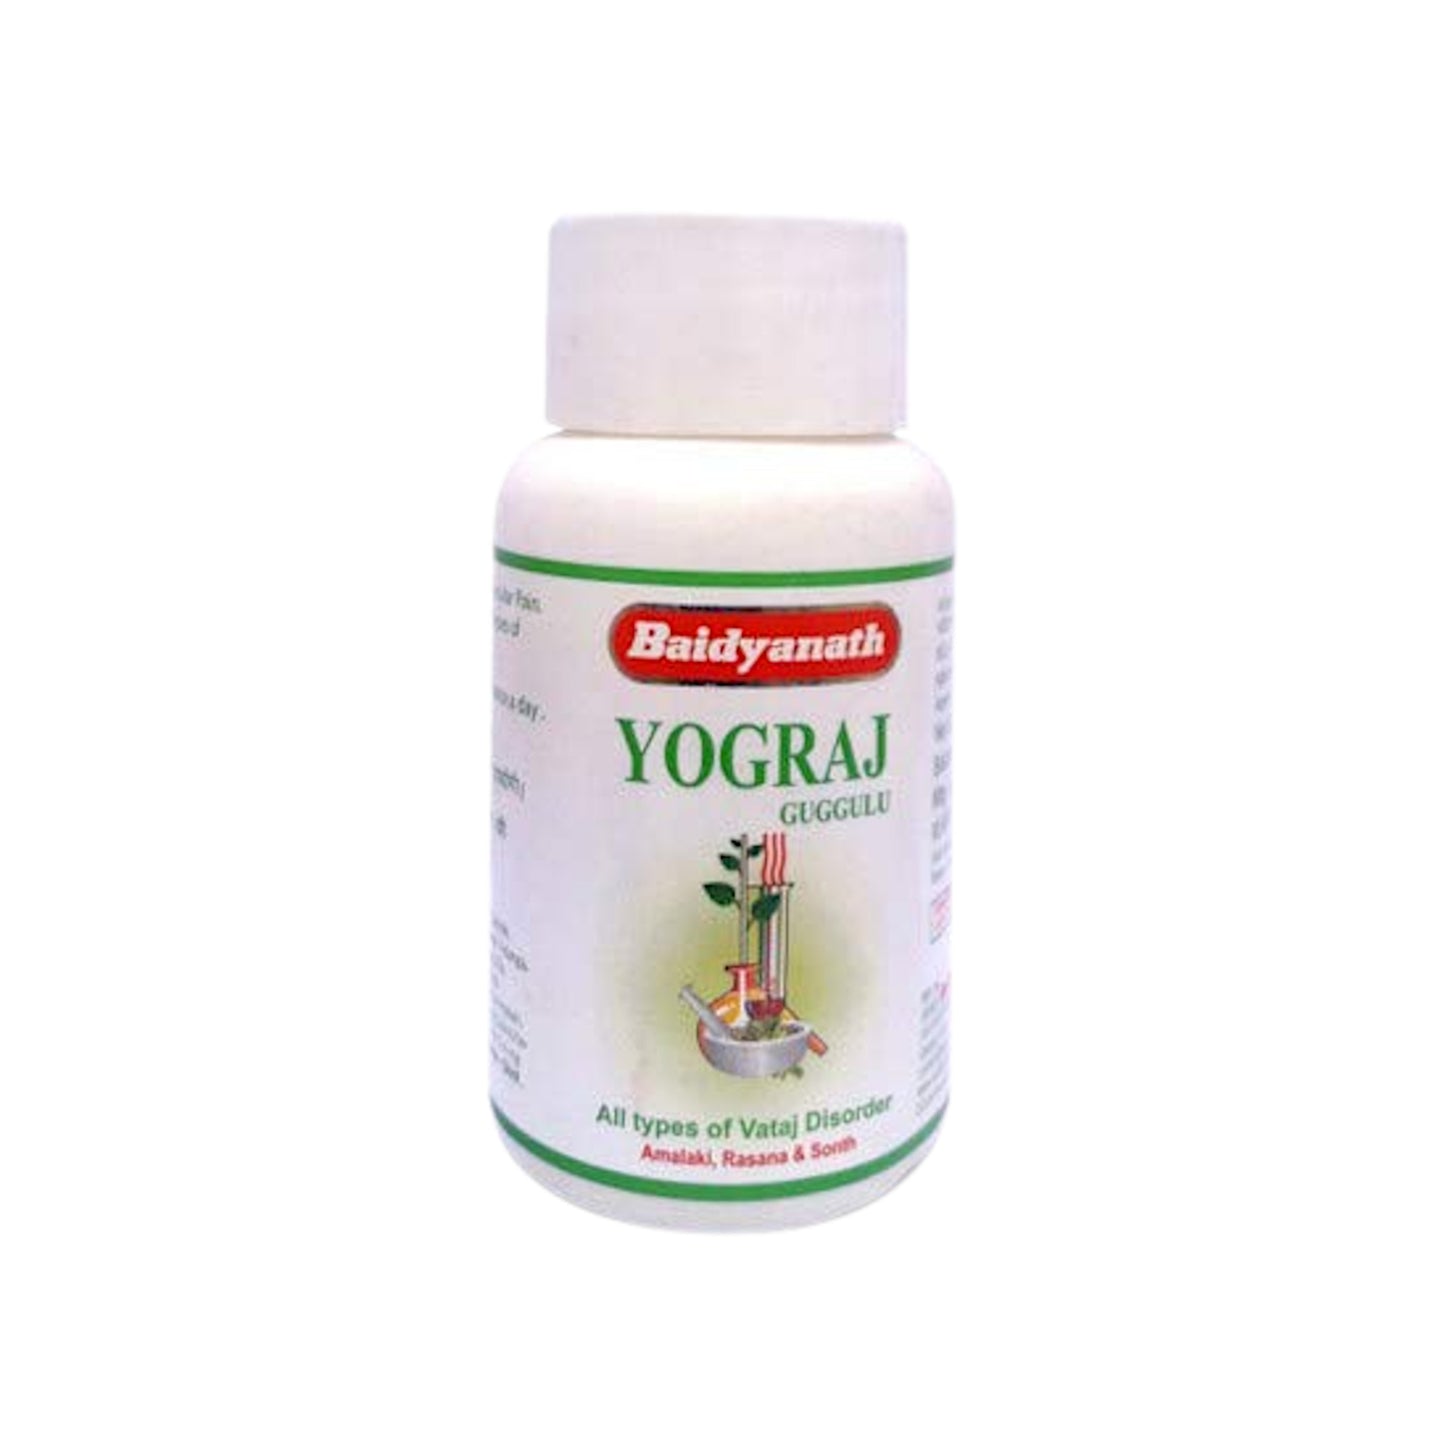 Image: Baidyanath Yogaraj Guggul 120 Tablets: Ayurvedic joint formula for arthritis and rheumatism.